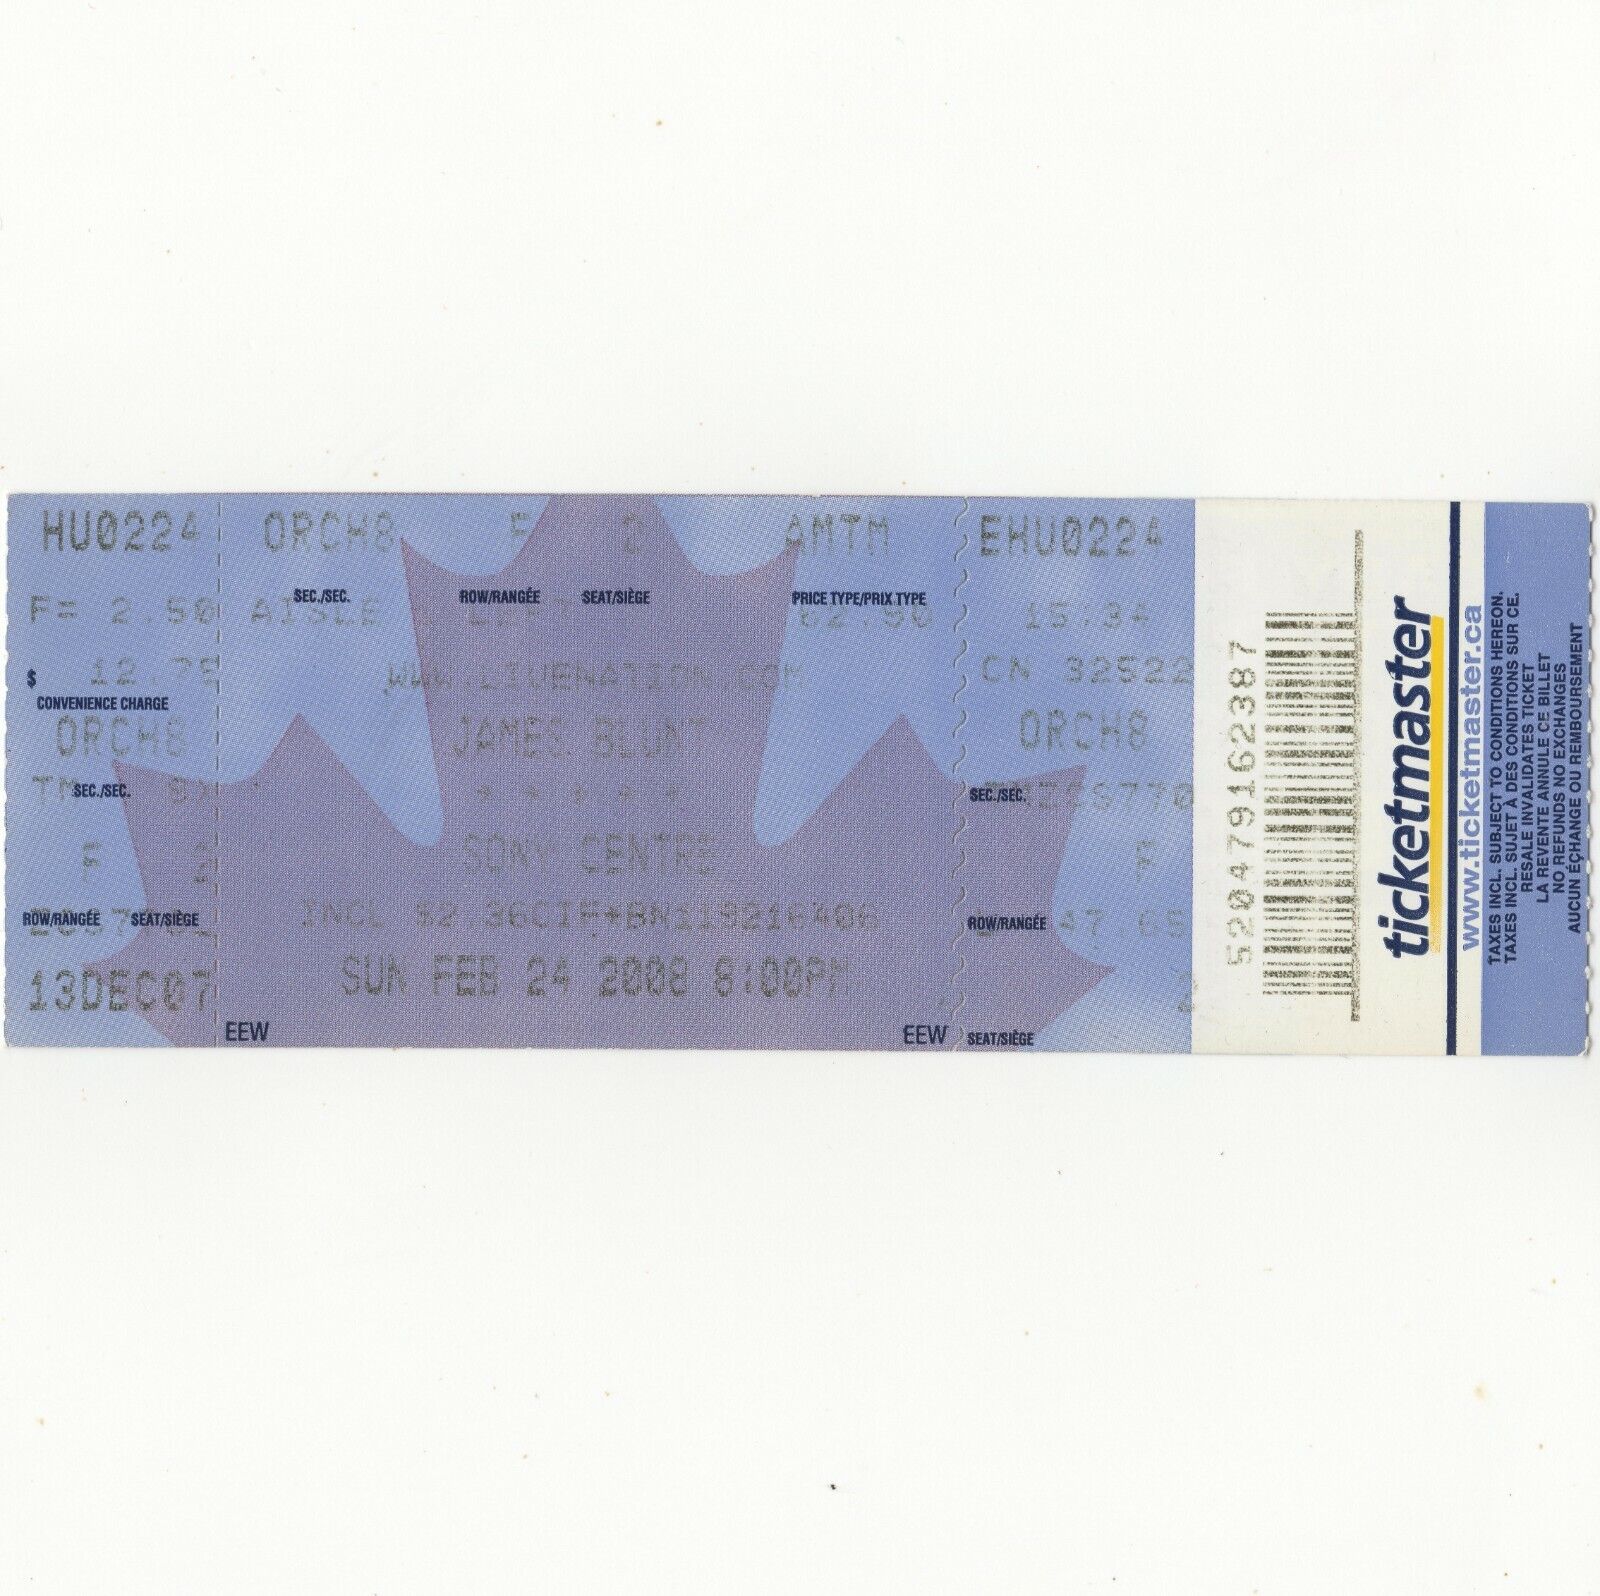 James Blunt Full Concert Ticket Stub Toronto On 2/24/08 Canada Sony Center Rare